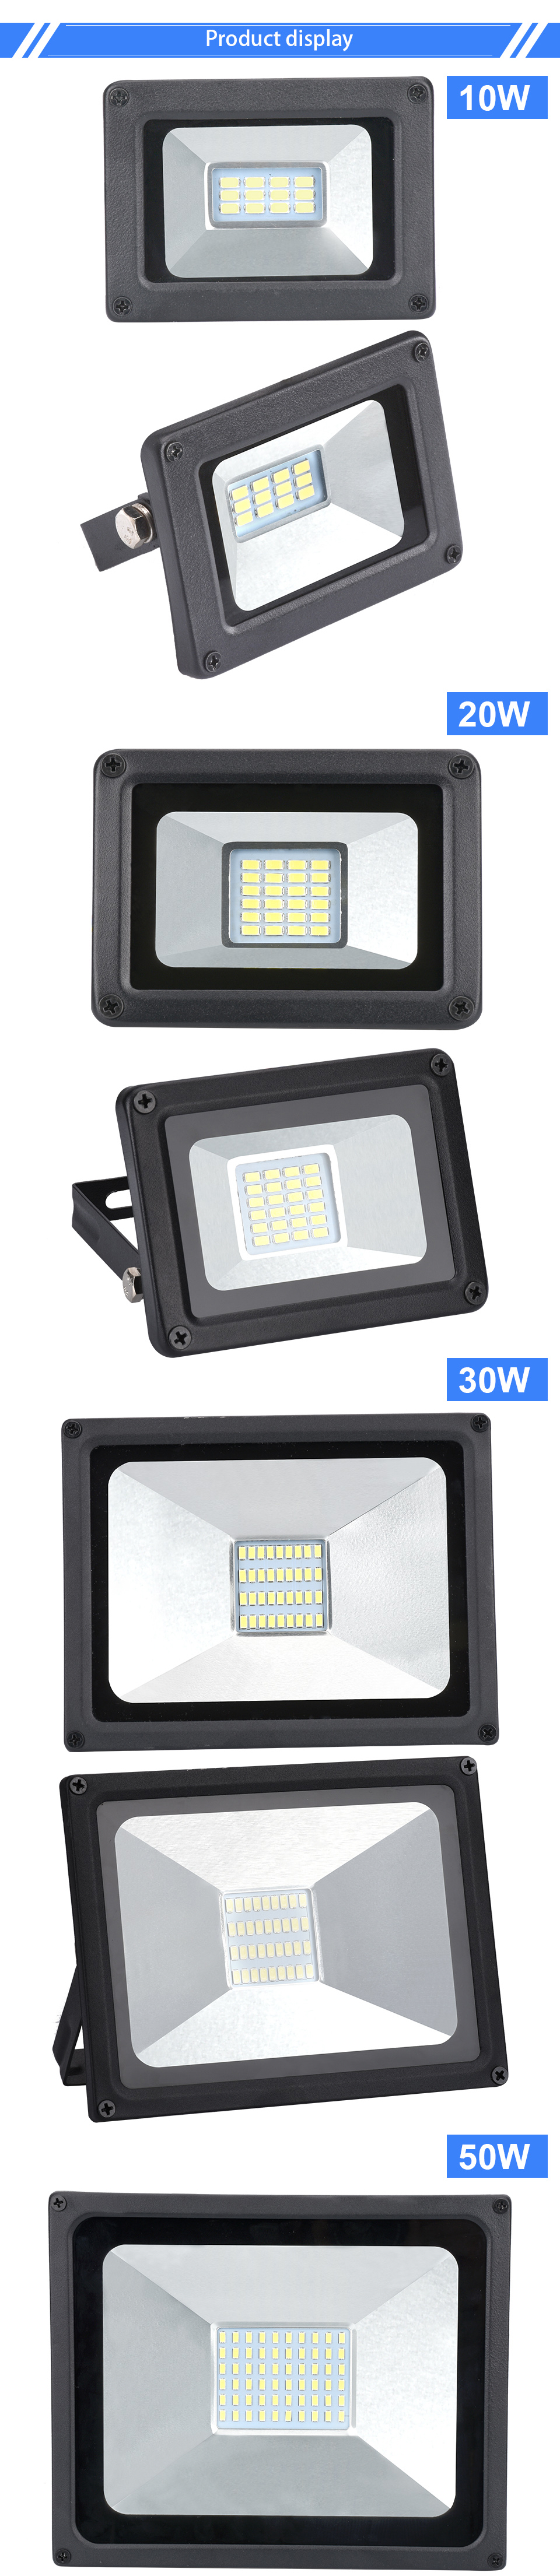 220V LED FloodLight 10W 30W 50W 100W Reflector LED Flood Light Waterproof IP65 Spotlight Wall Outdoor Lighting Warm Cold White